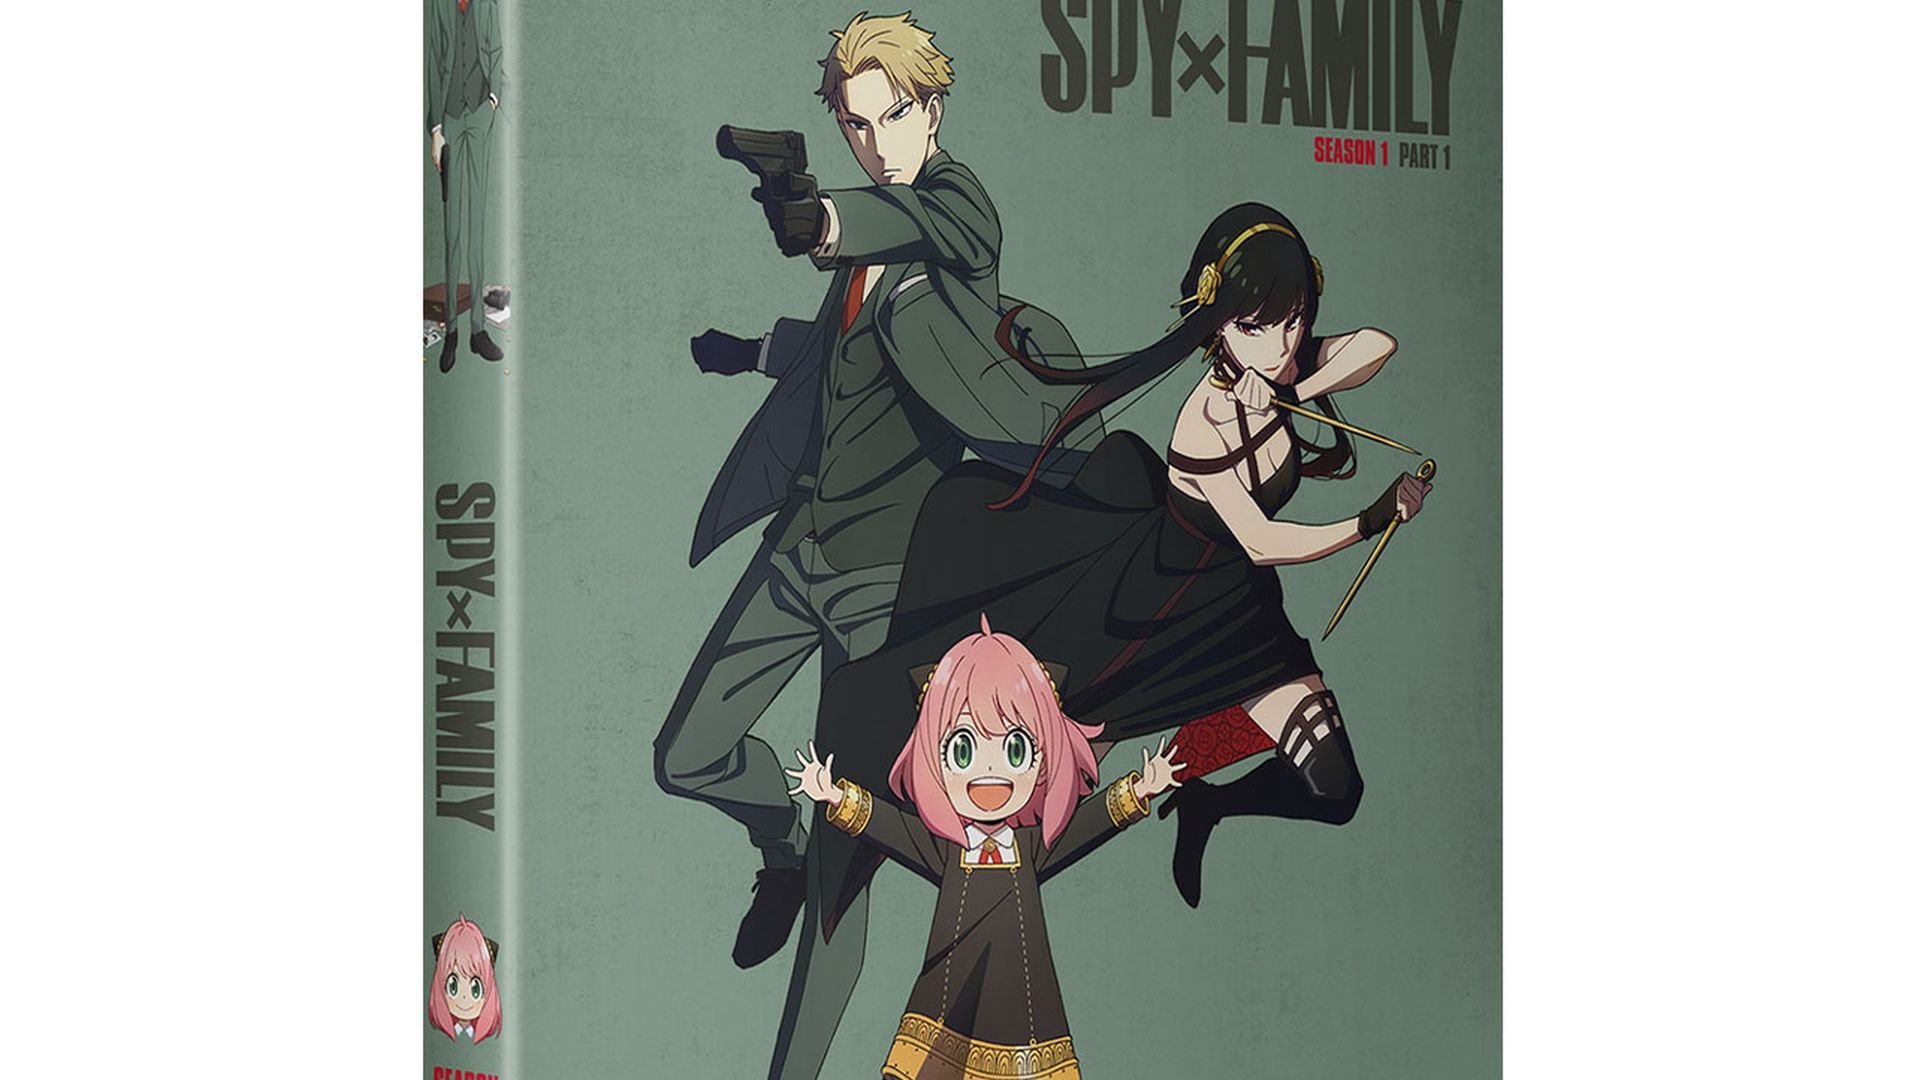 SPY x FAMILY Season 2 Anime Plays Its Cards Right in New Visual -  Crunchyroll News